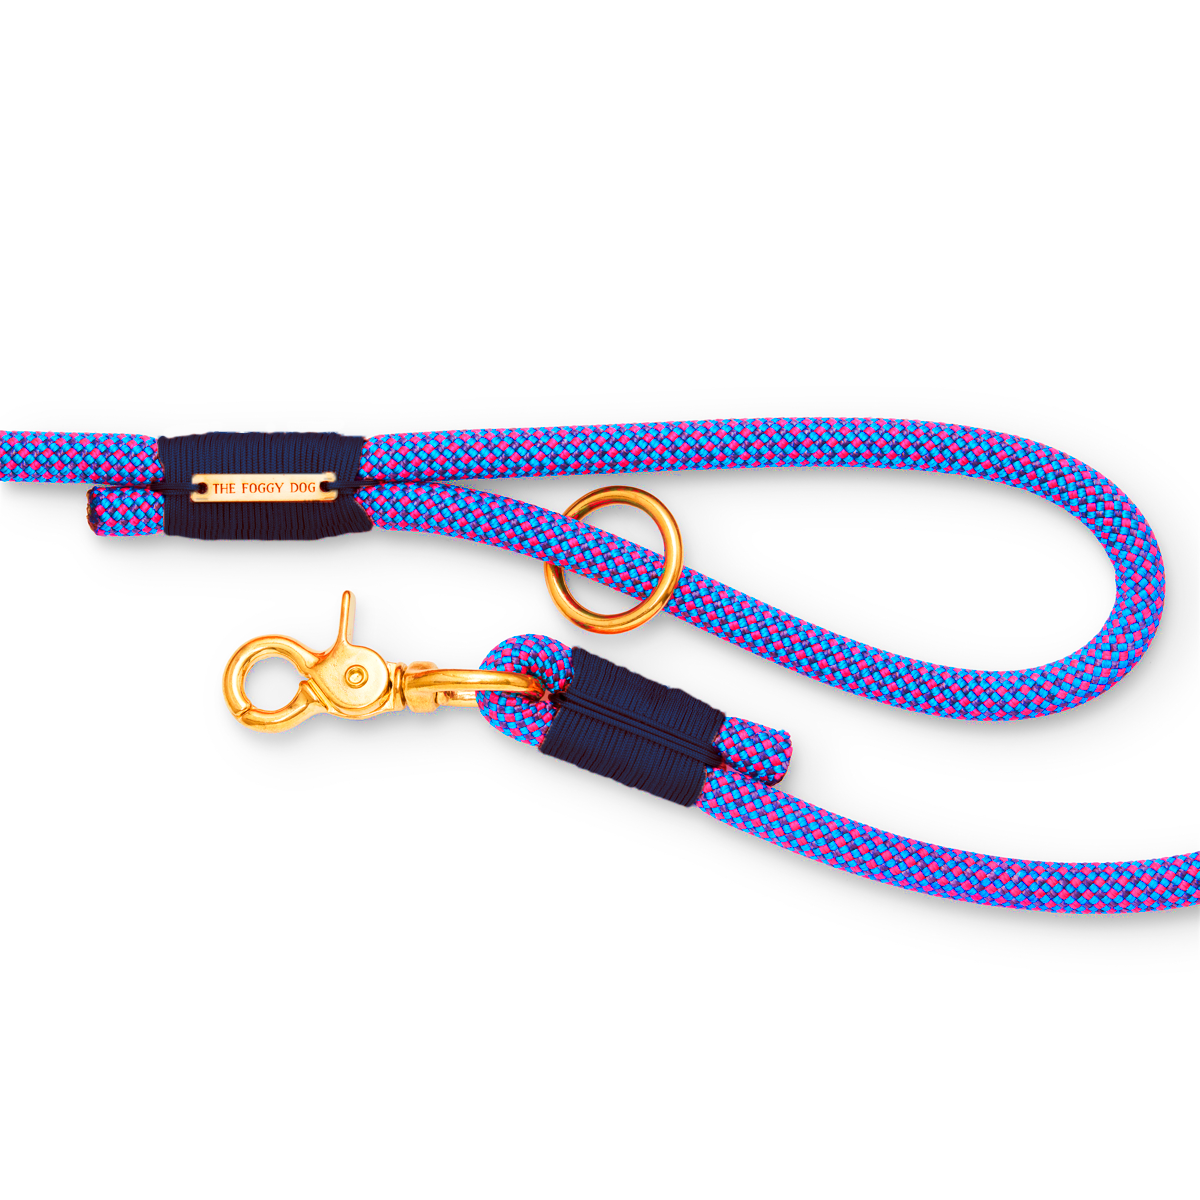 The Foggy Dog Neon Tetra Climbing Rope Dog Leash